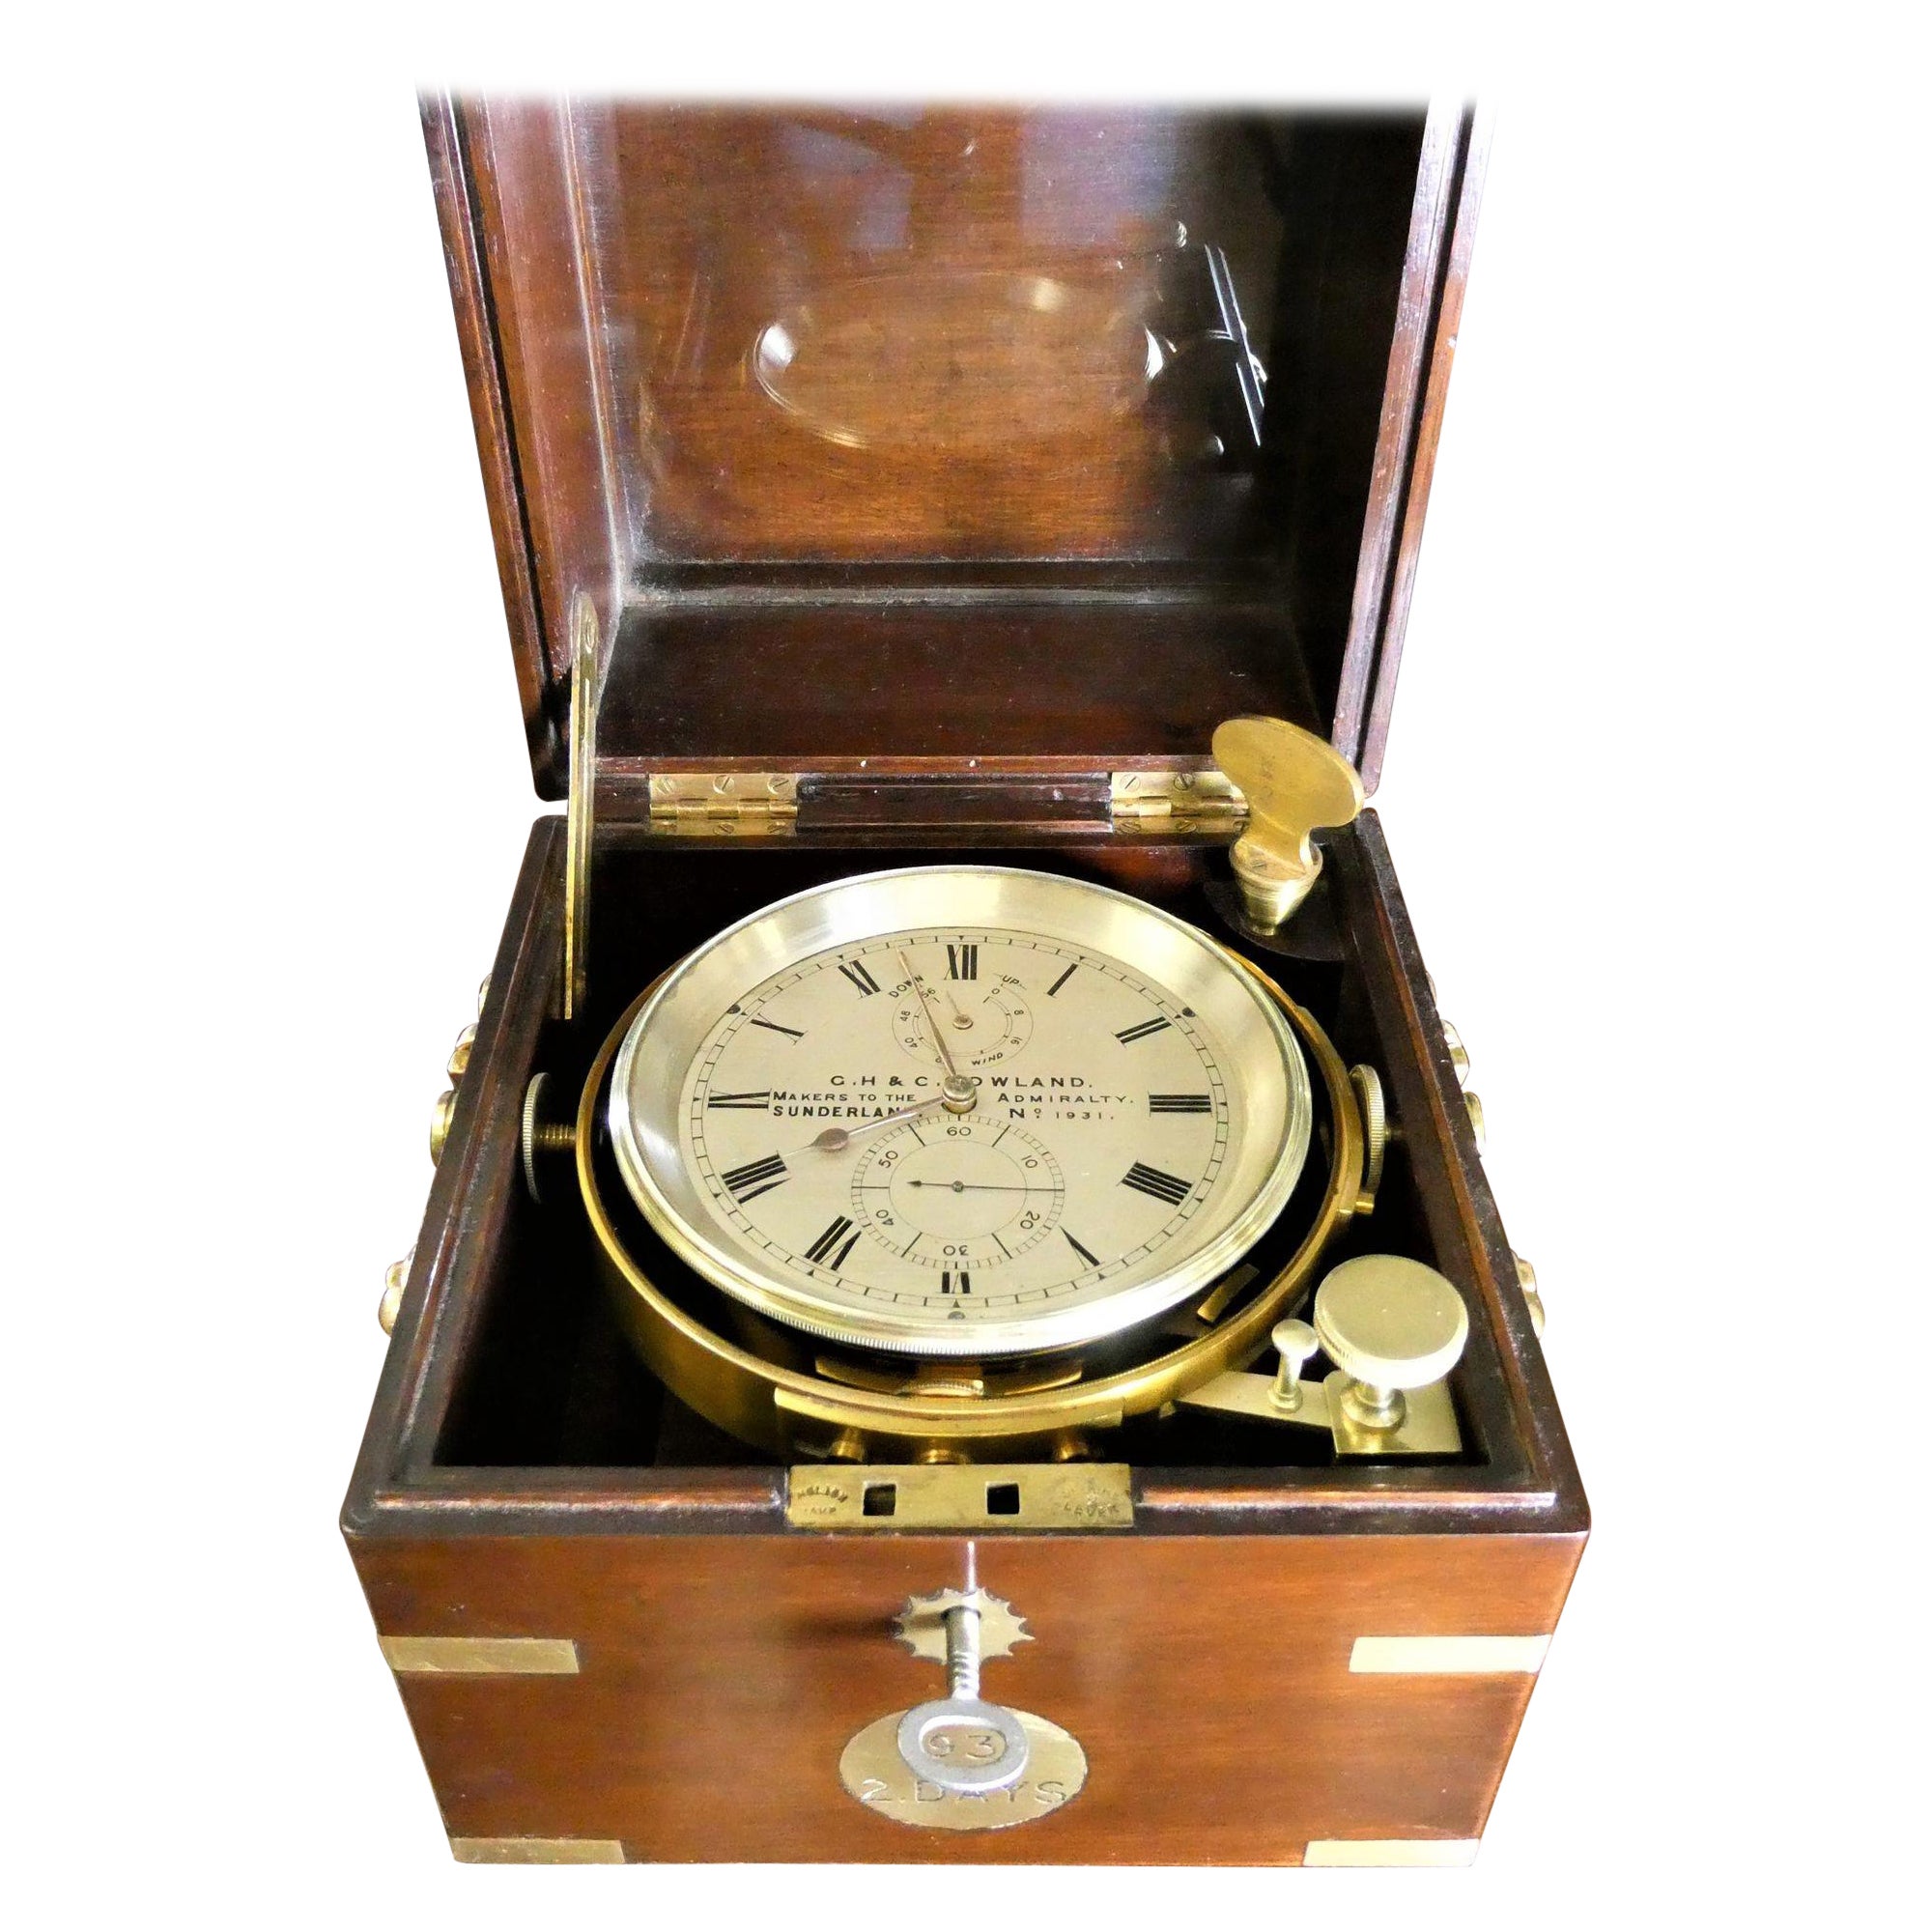 Zwei-Tage-Marinechronometer, G.H & C Gowland, Sunderland Nr.1931